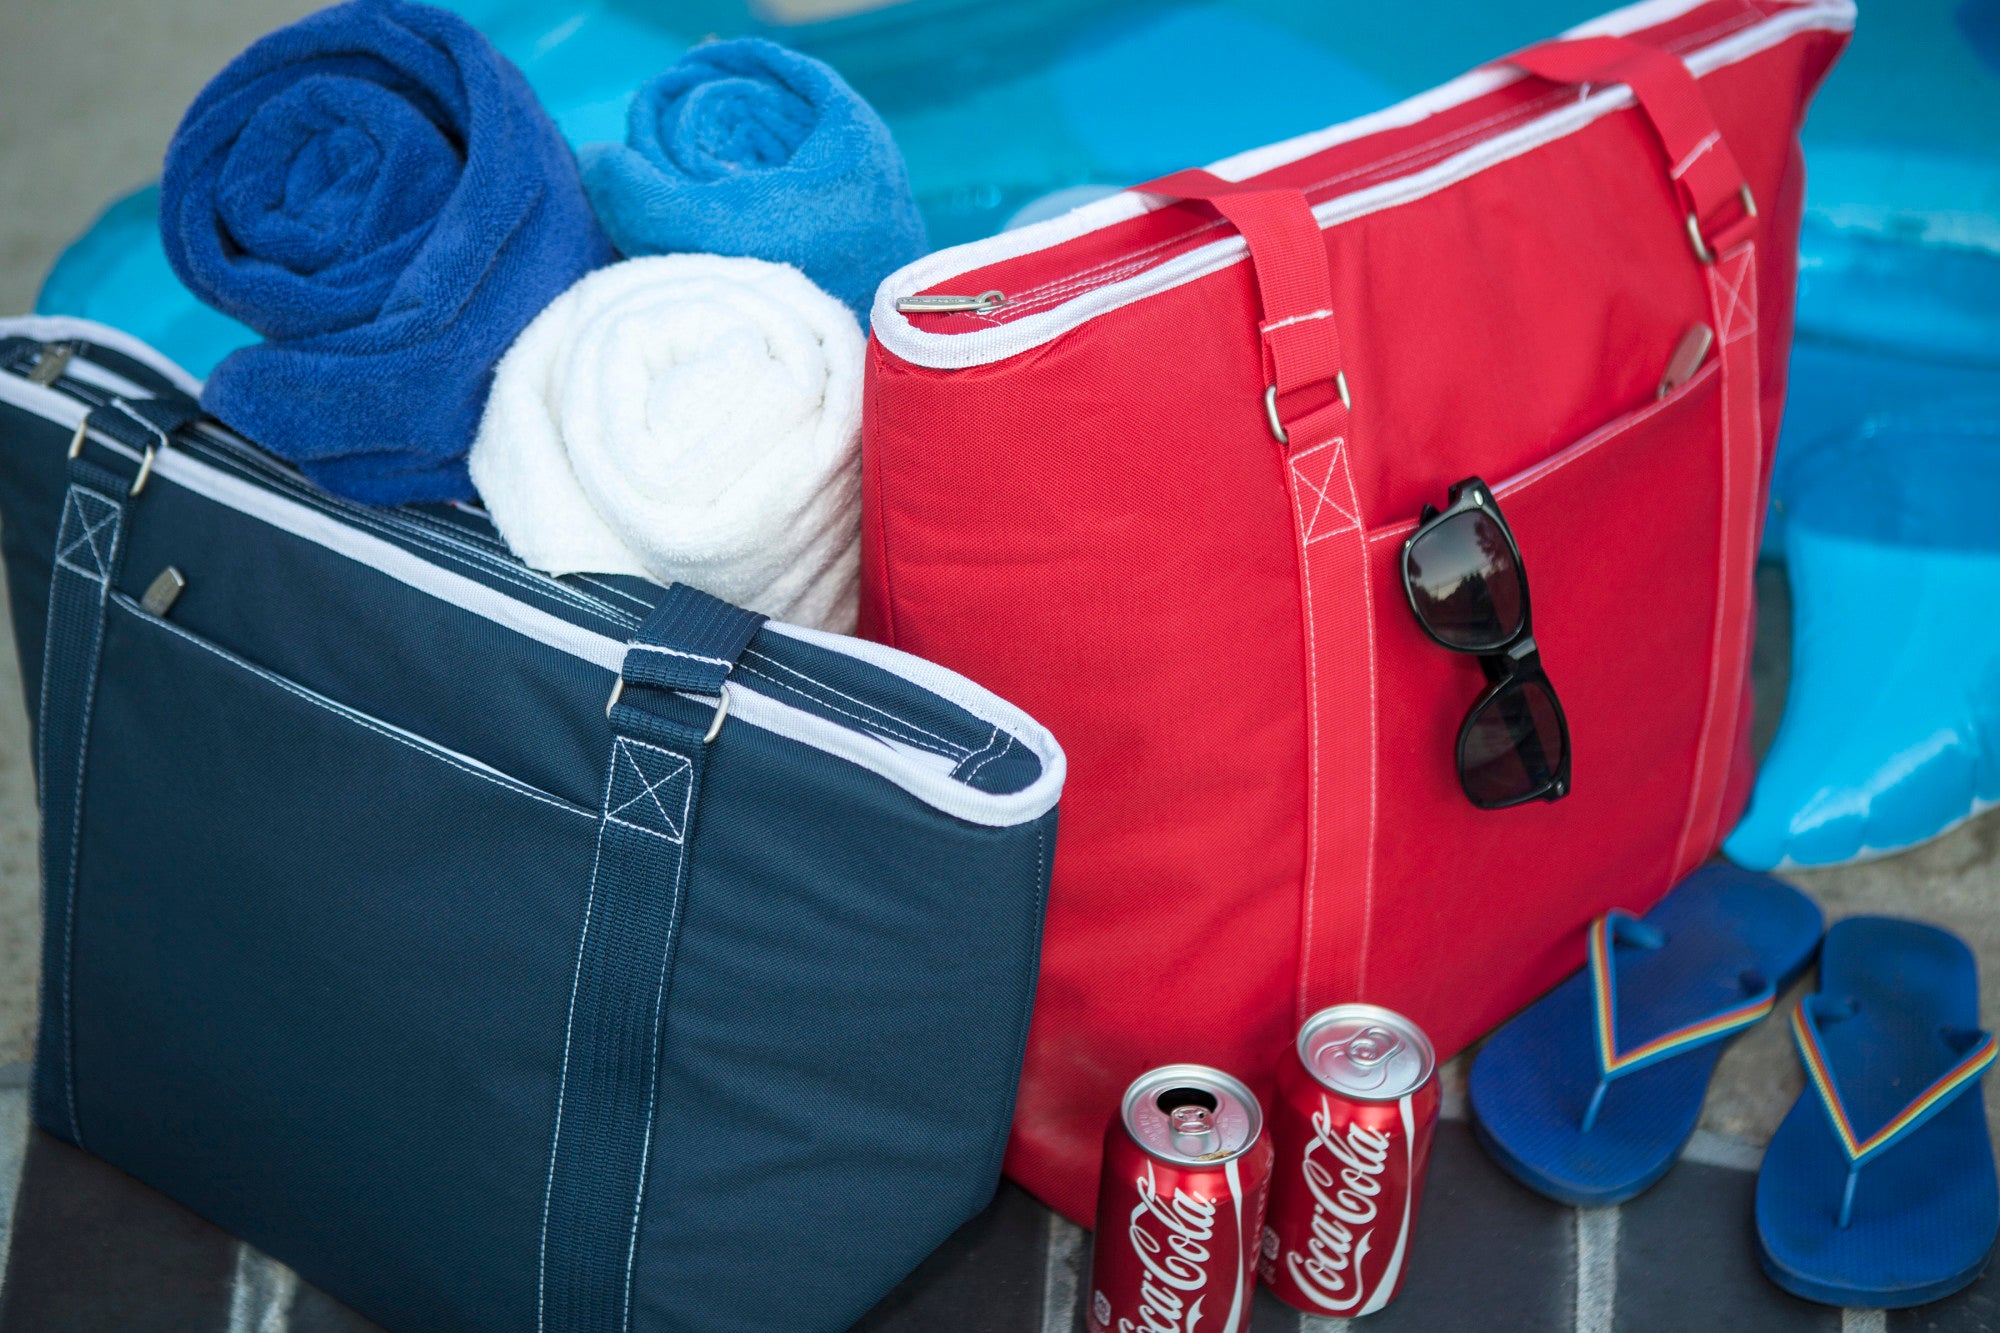 New England Patriots - Topanga Cooler Tote Bag